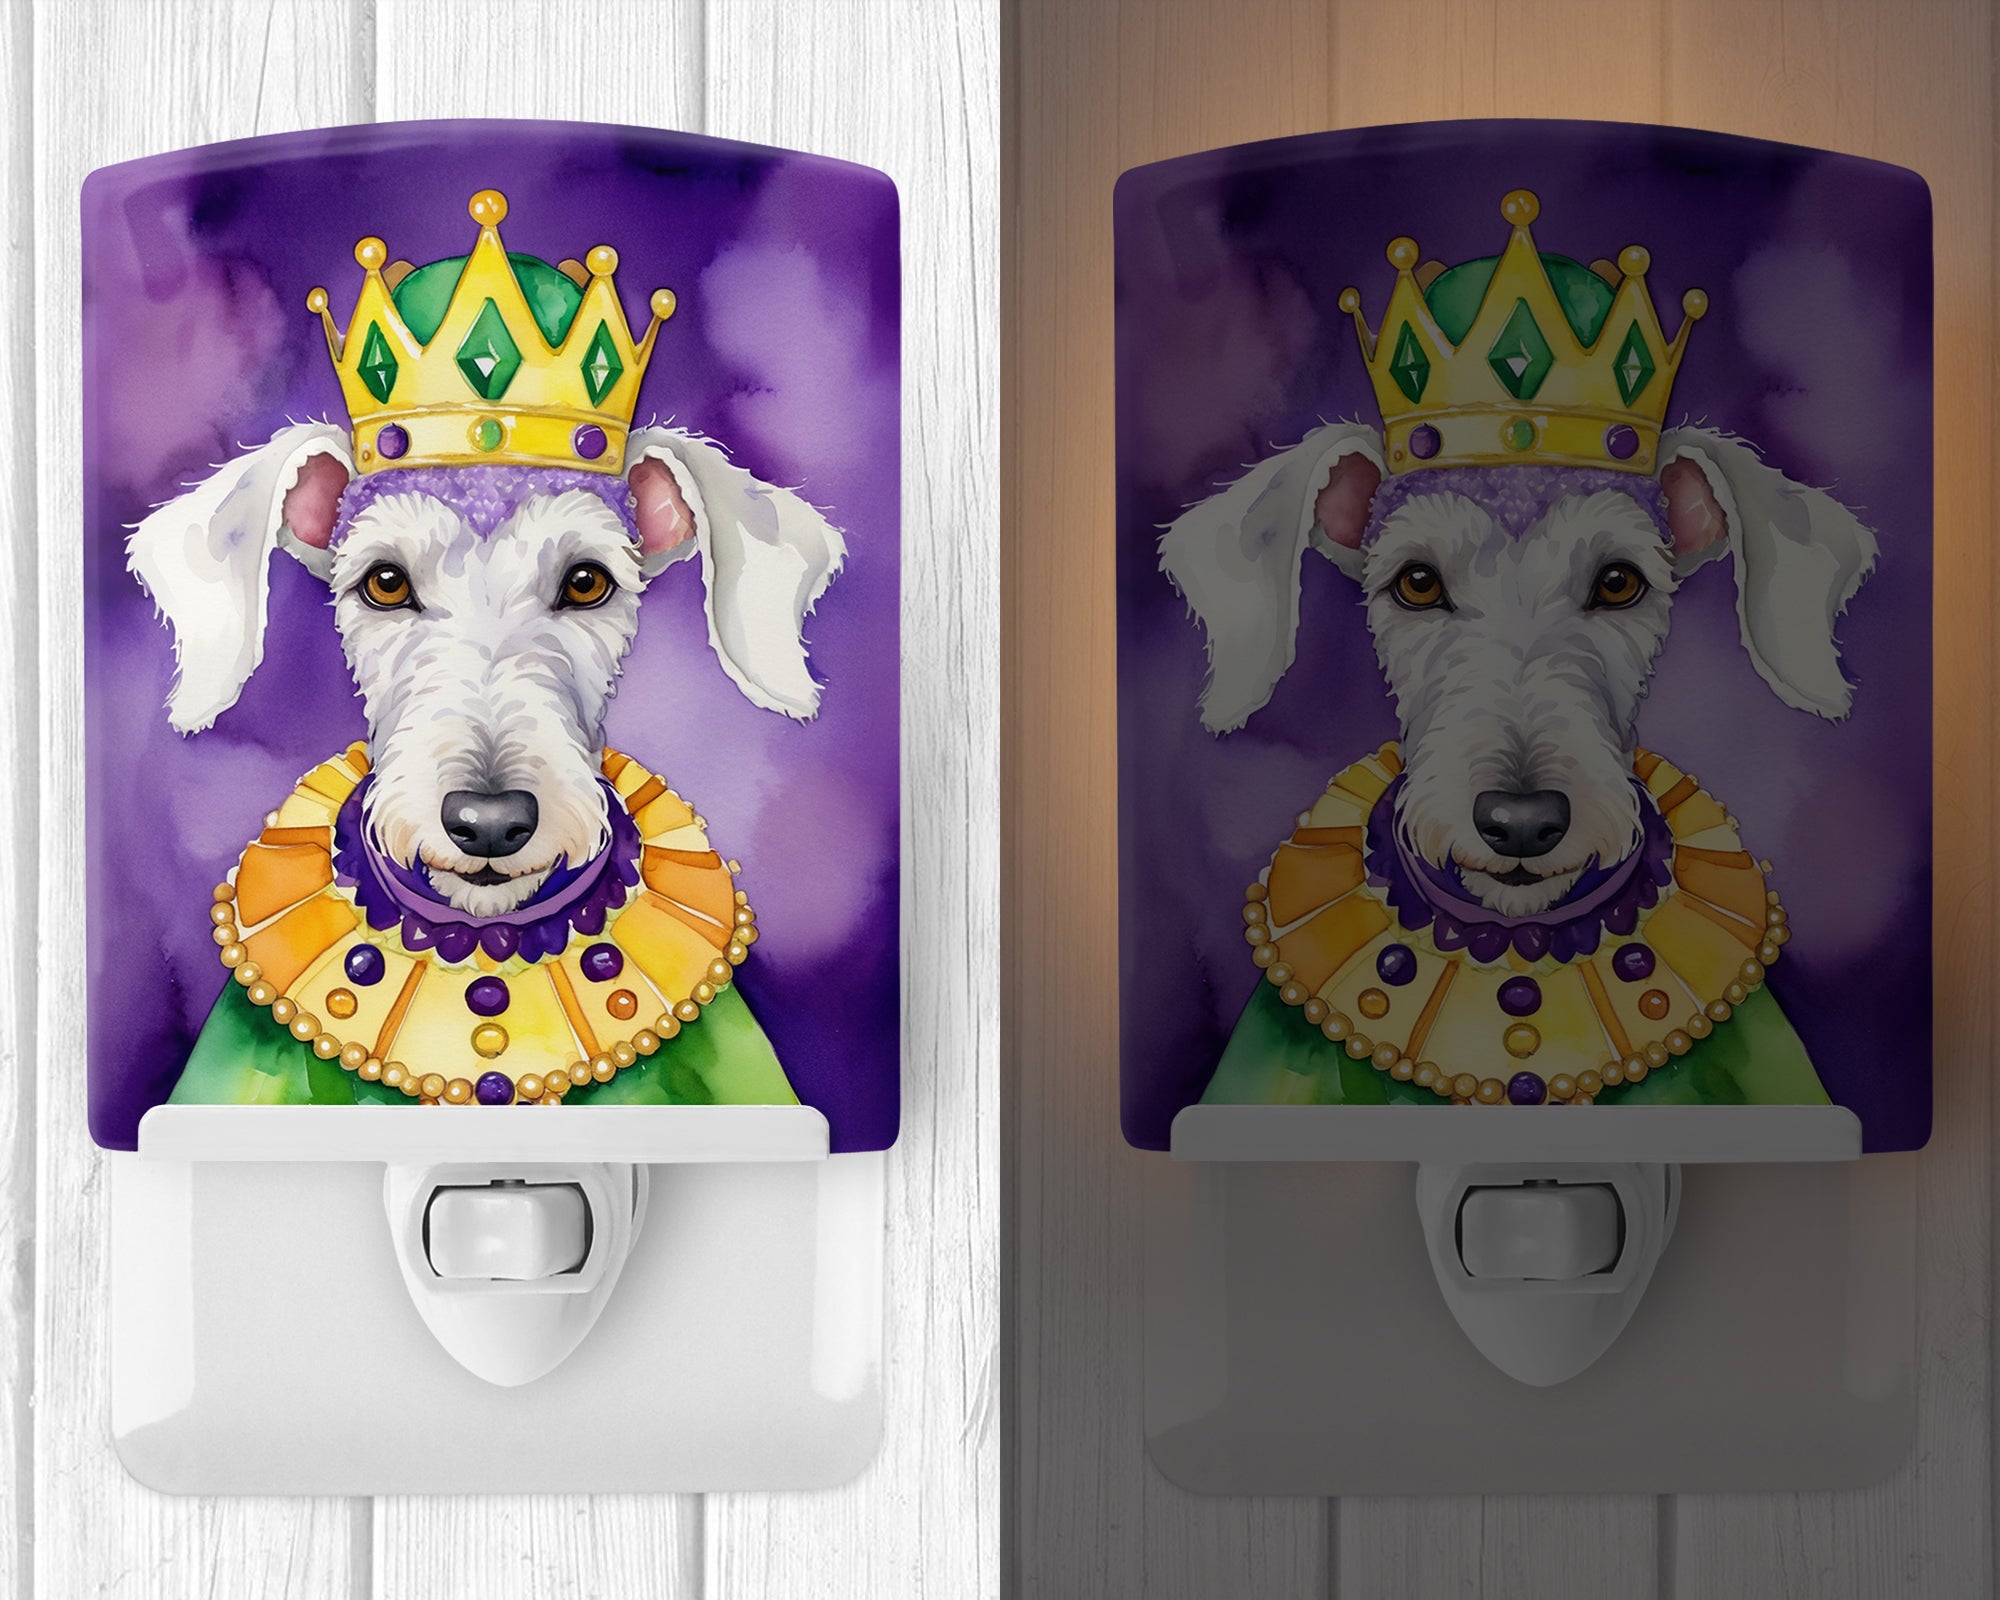 Buy this Bedlington Terrier King of Mardi Gras Ceramic Night Light